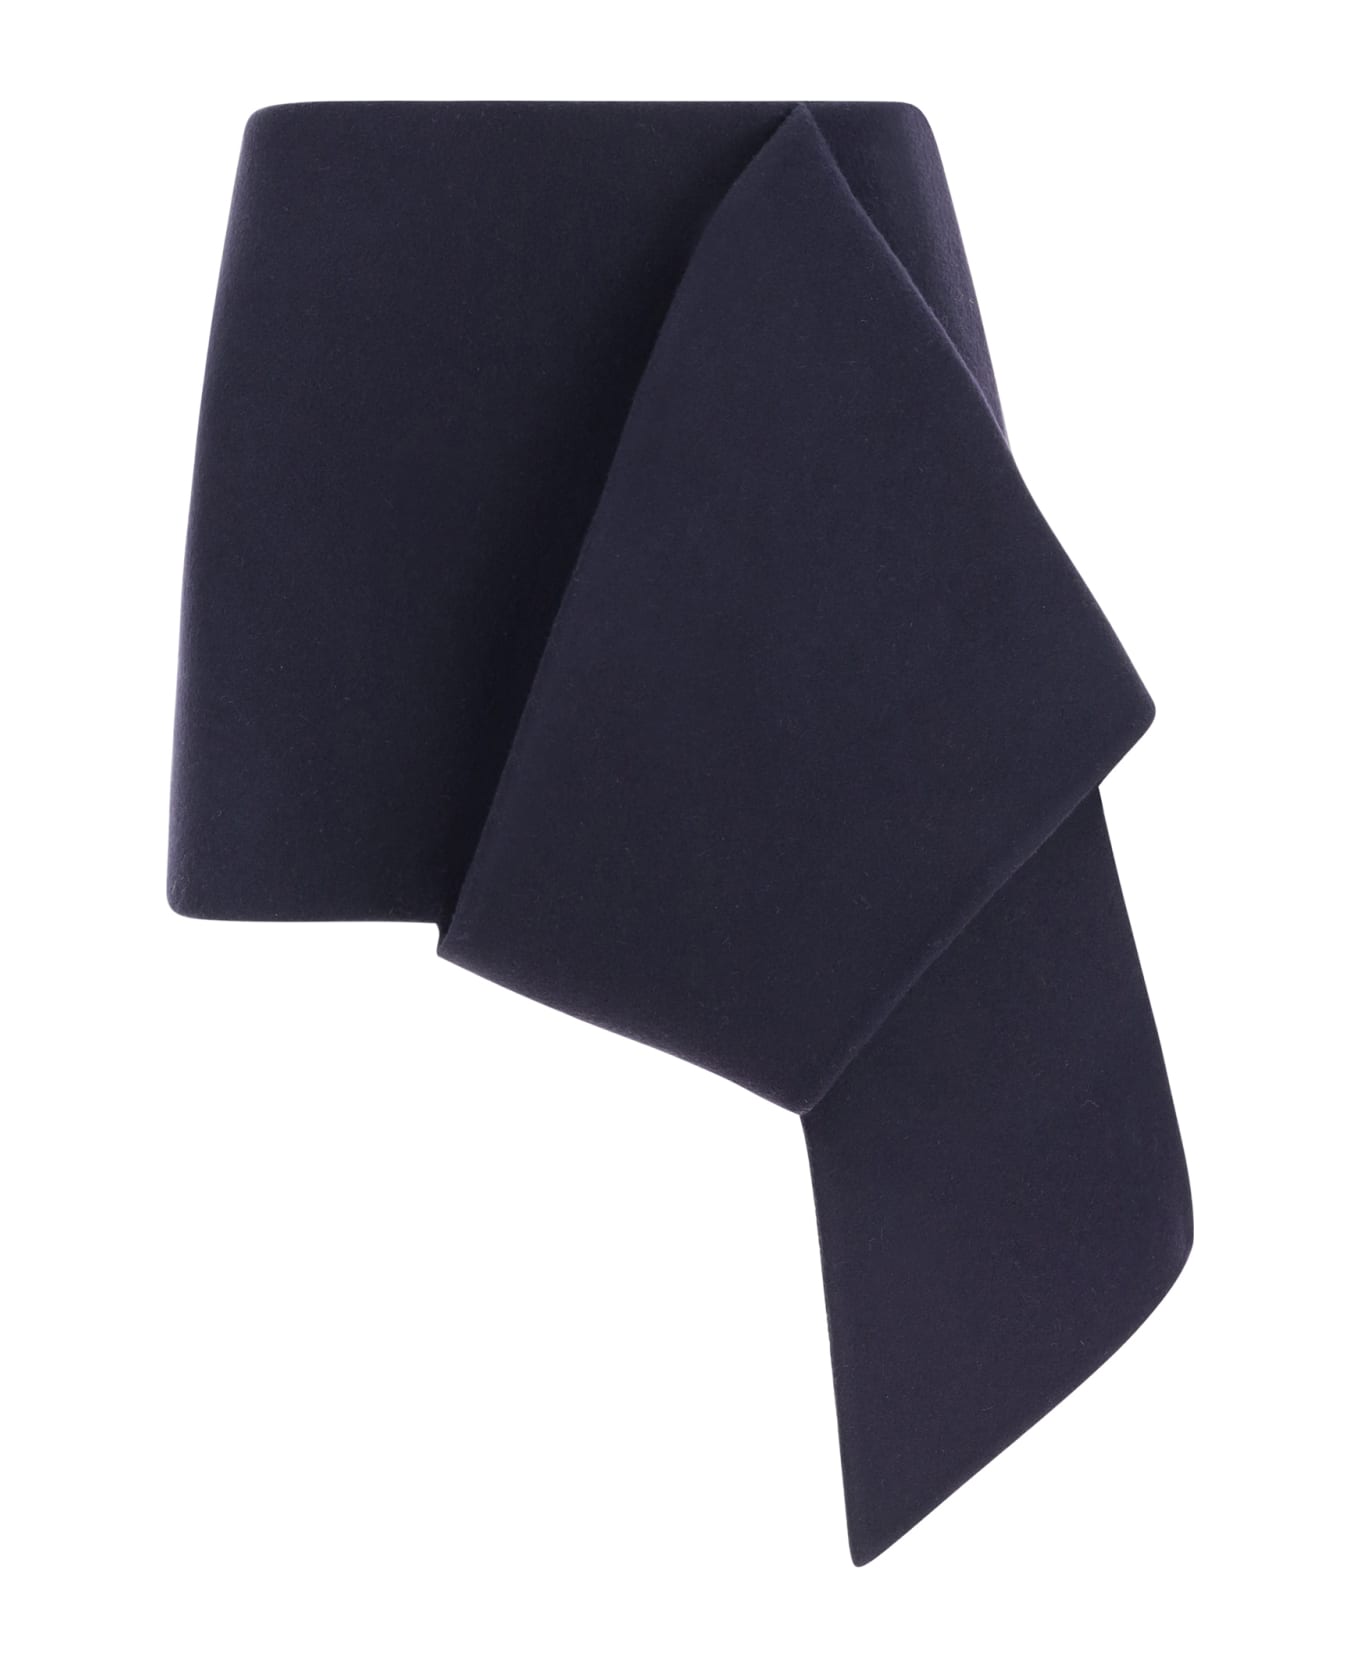 Prada Miniskirt - Blu スカート